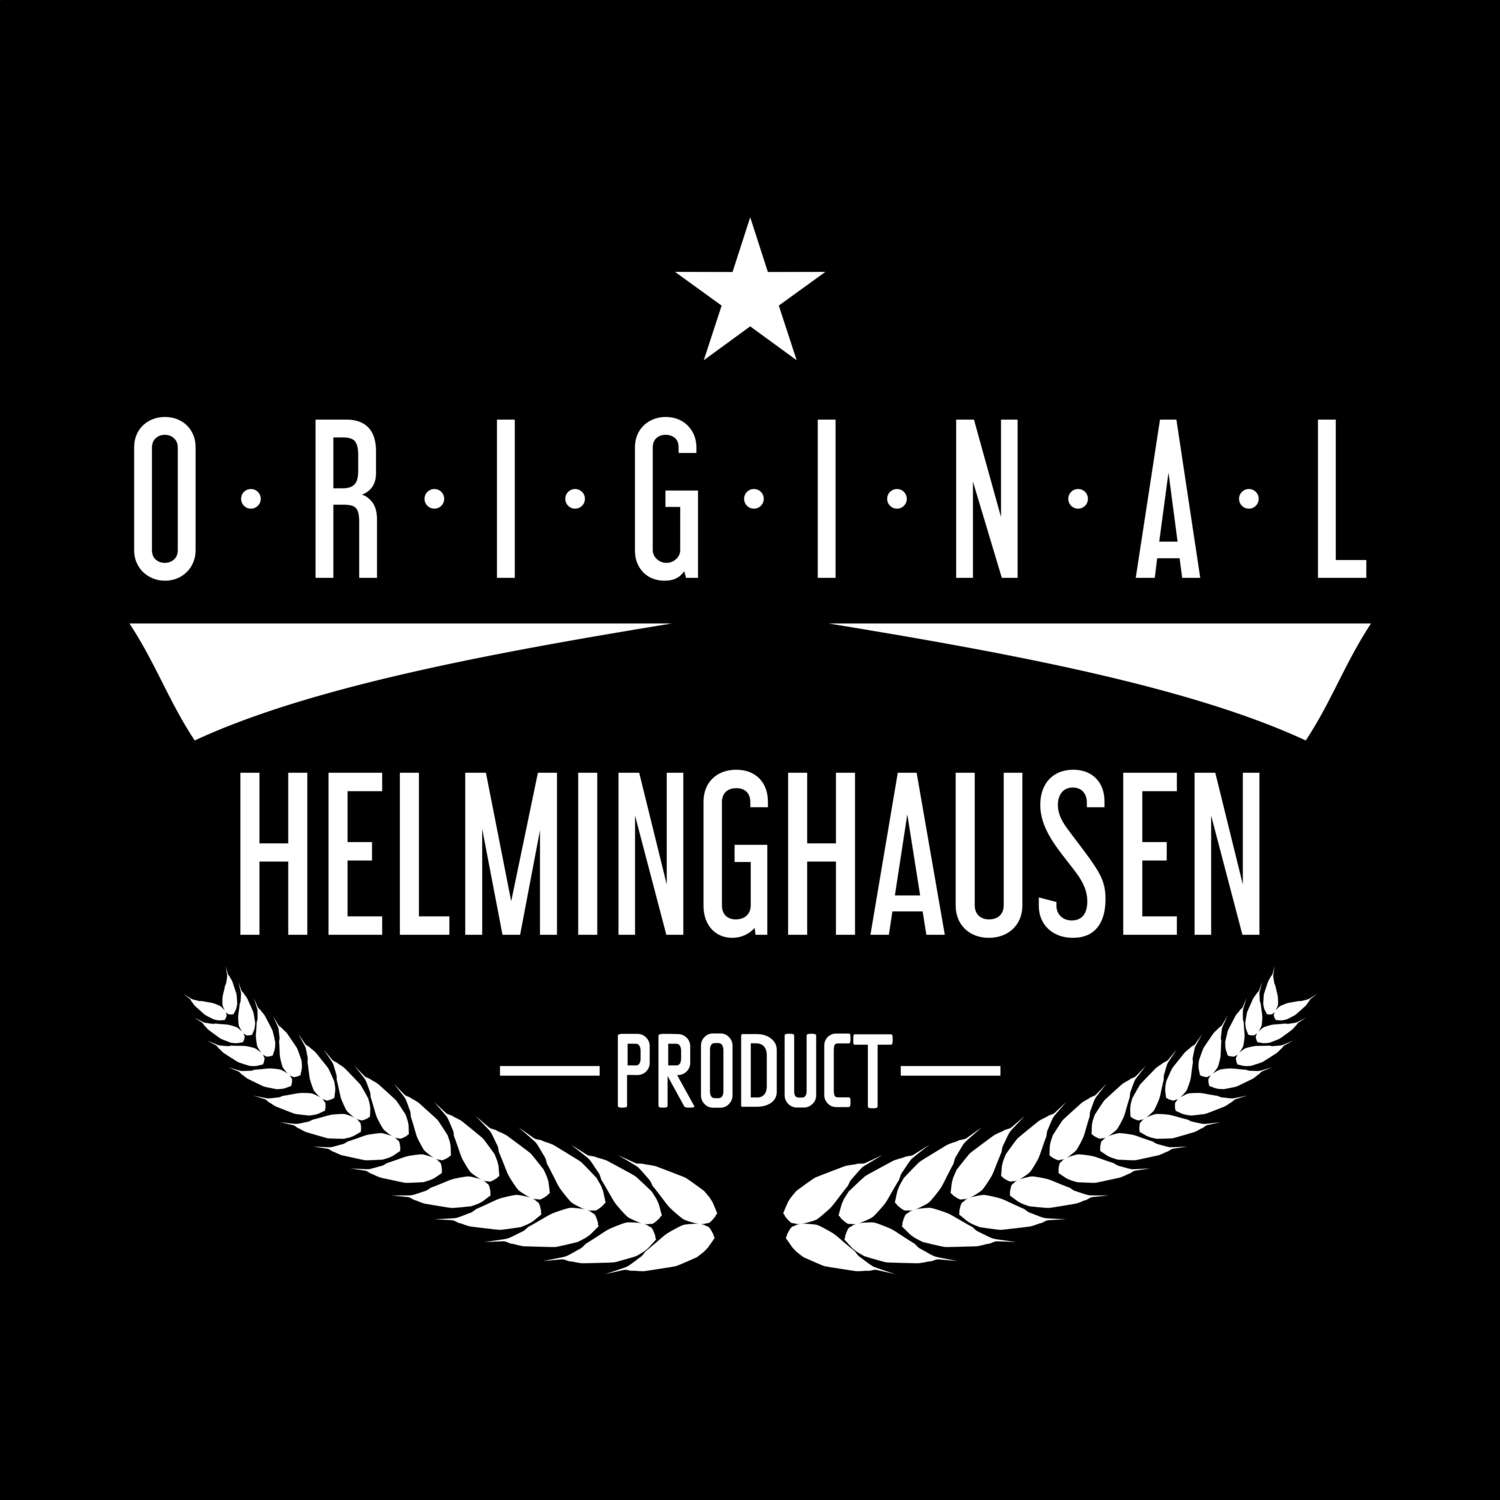 Helminghausen T-Shirt »Original Product«